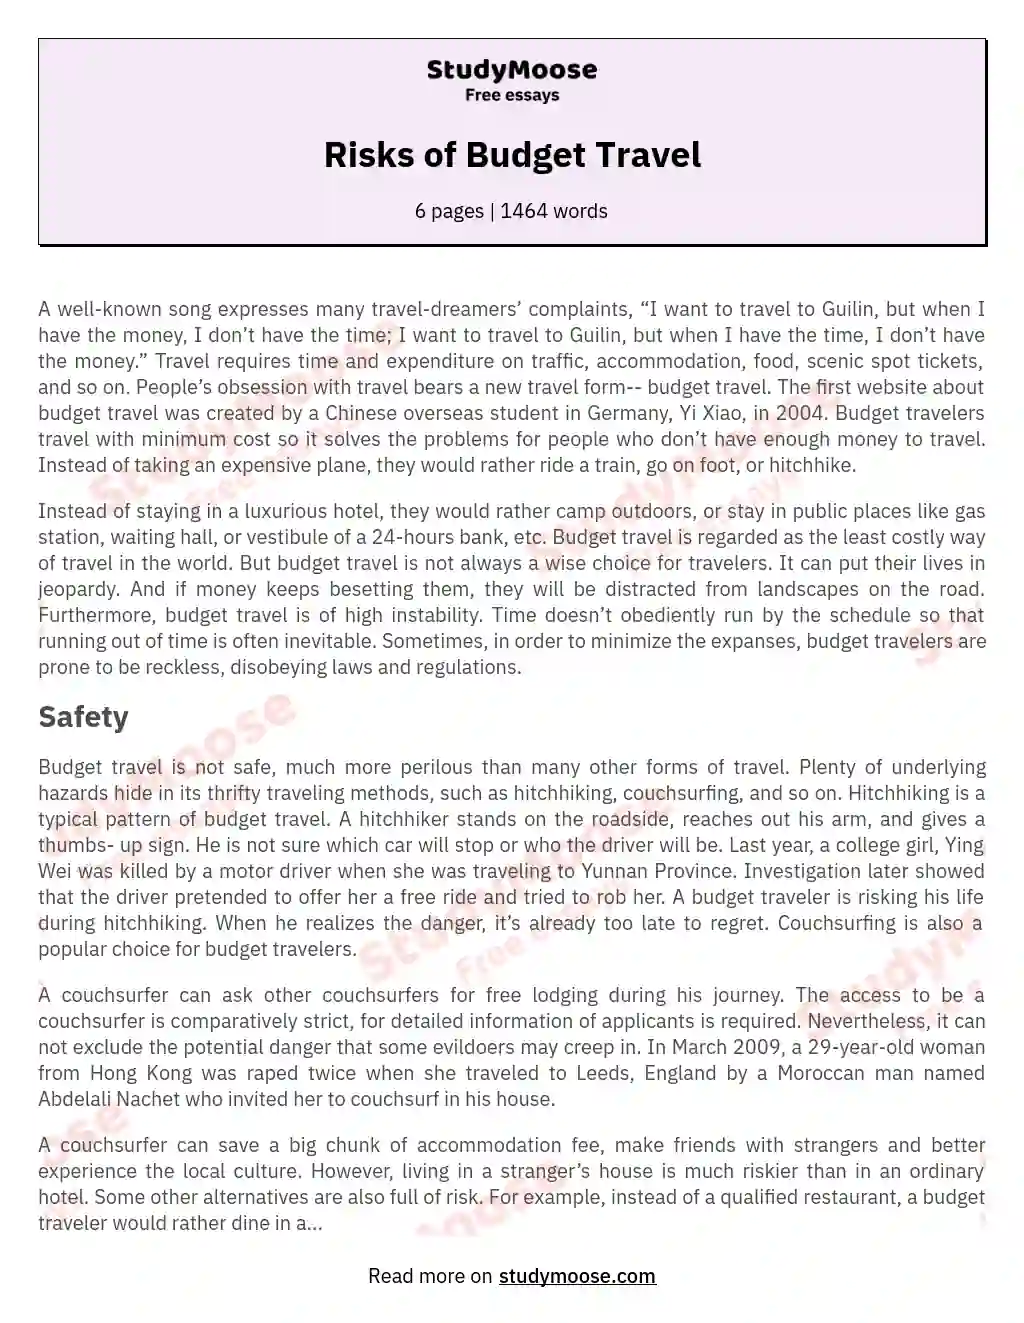 Risks of Budget Travel essay